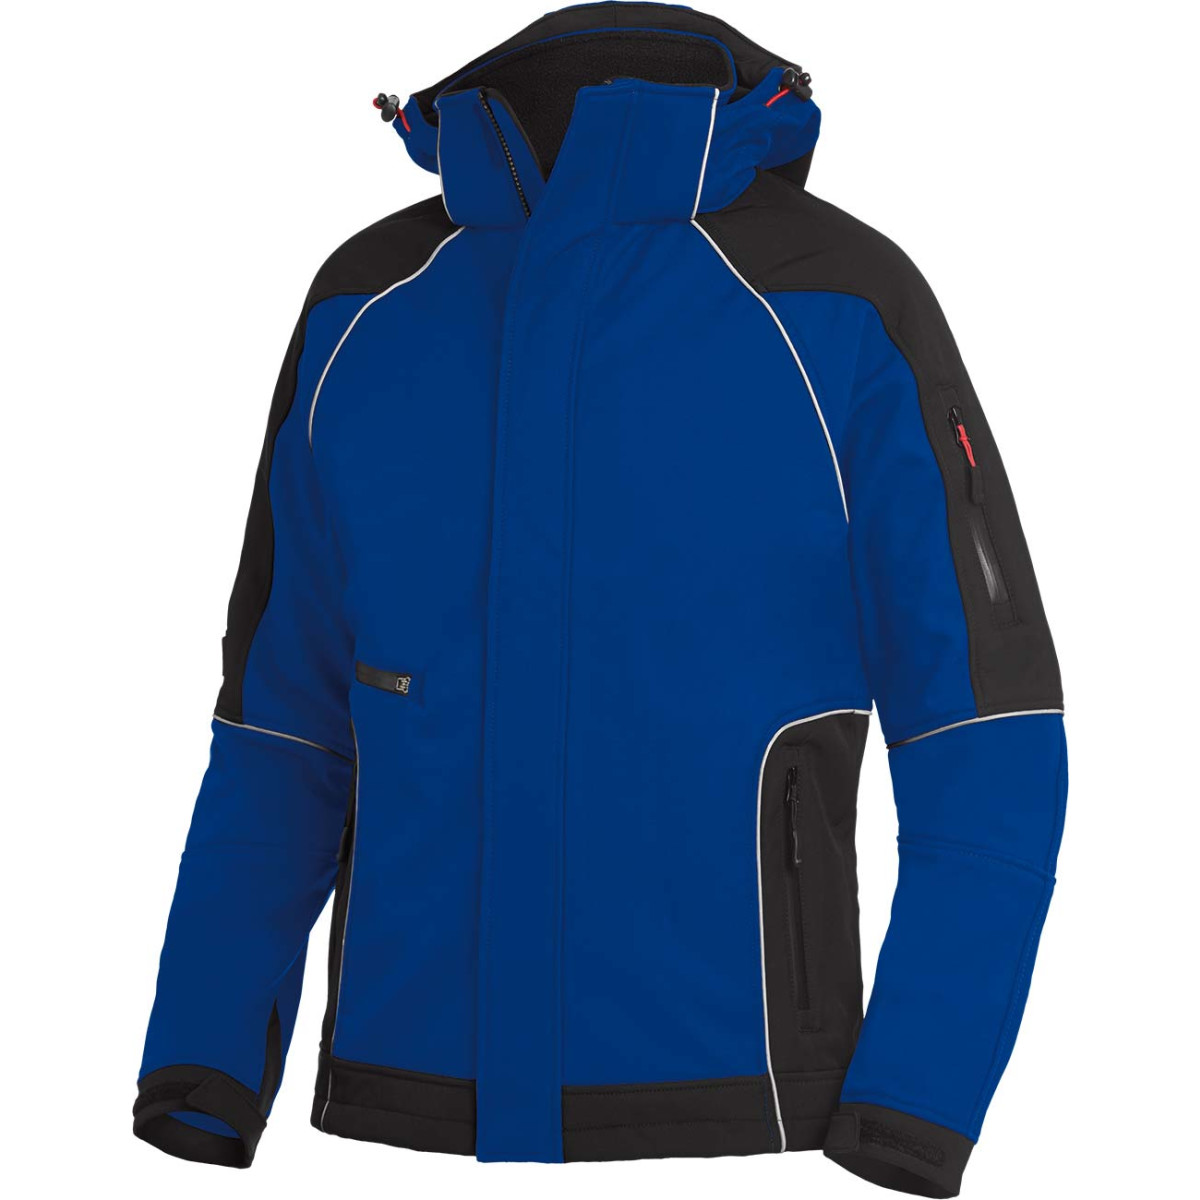 Winter Softshell-Jacke blau-schwarz - Arbeitsklamotten.de, 92,72 €